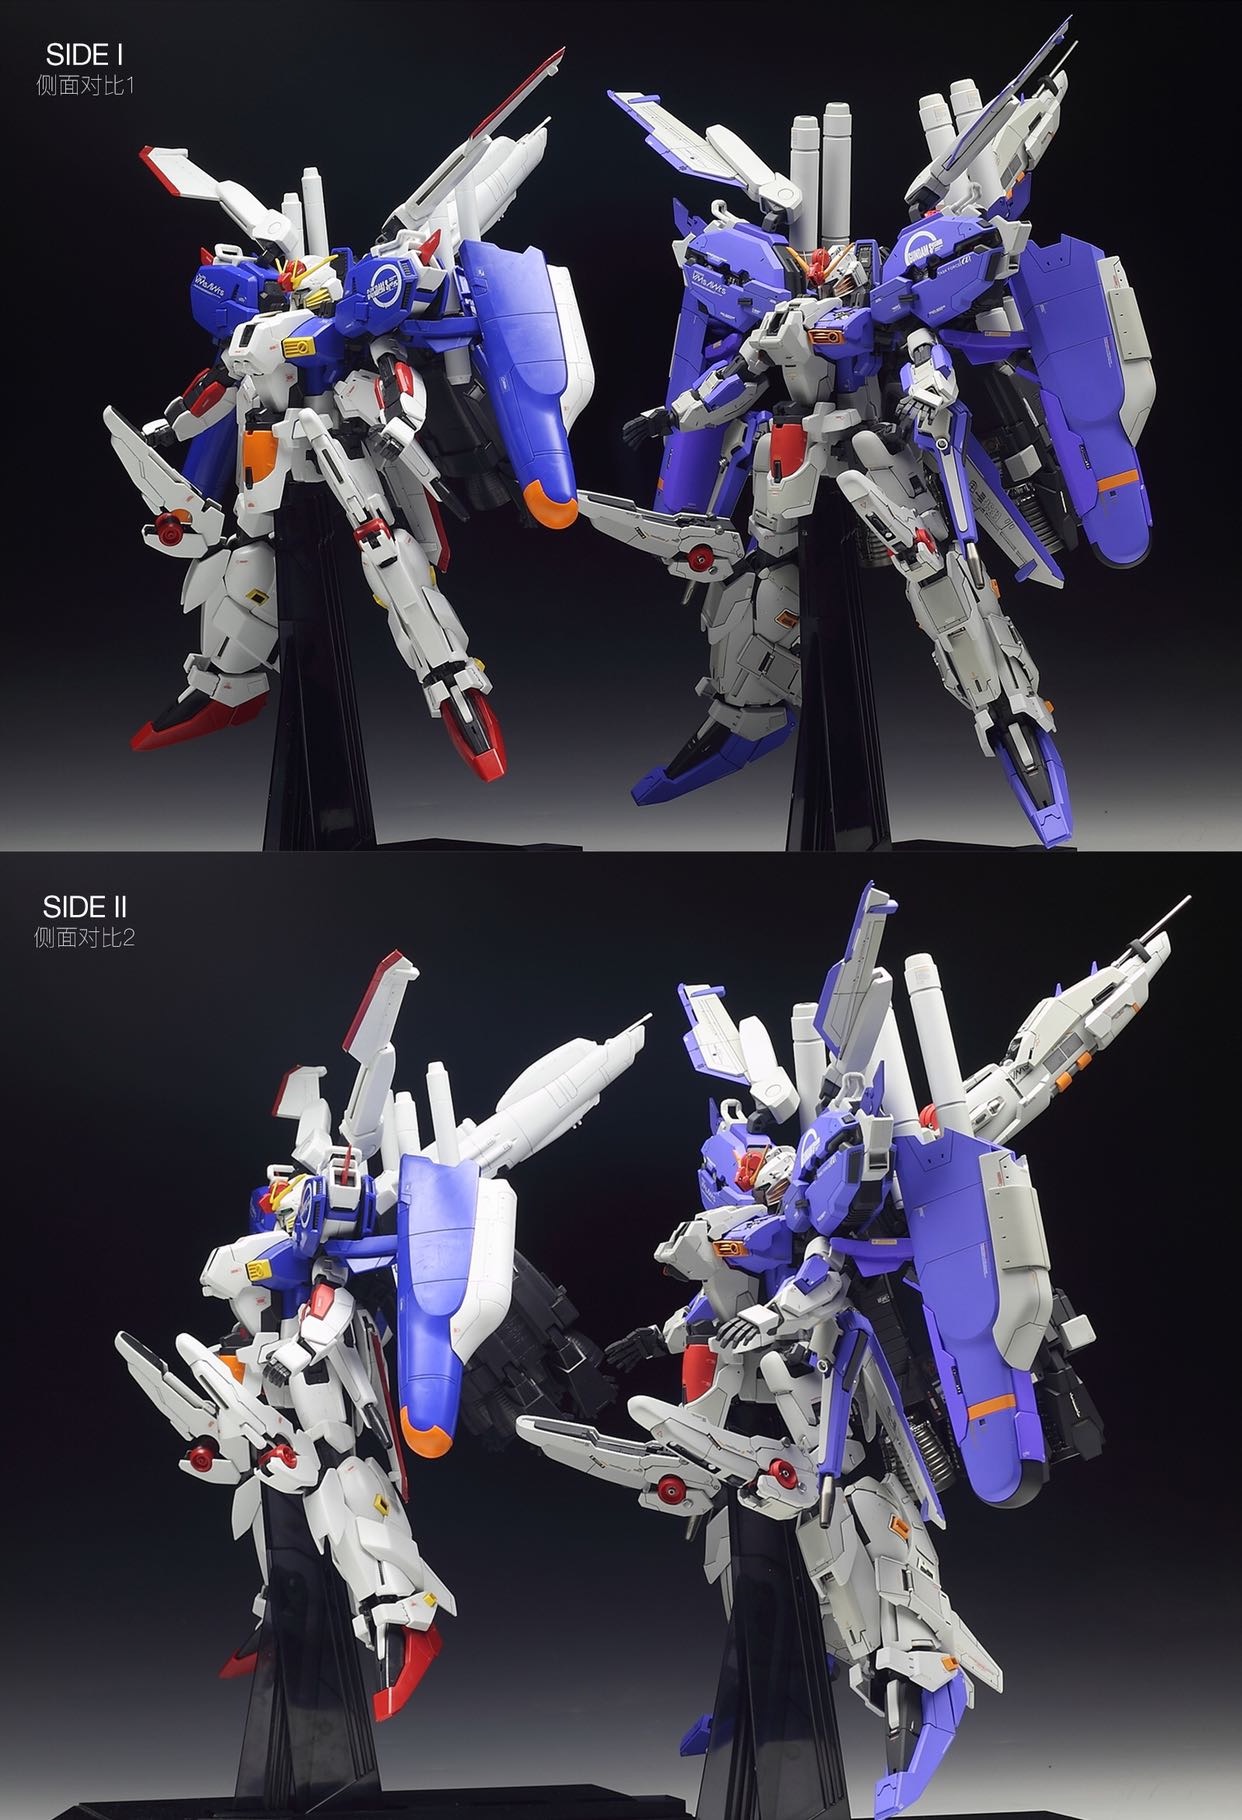 The51 1:100 MSA-0011[Ext] EX-S Gundam Conversion Kit